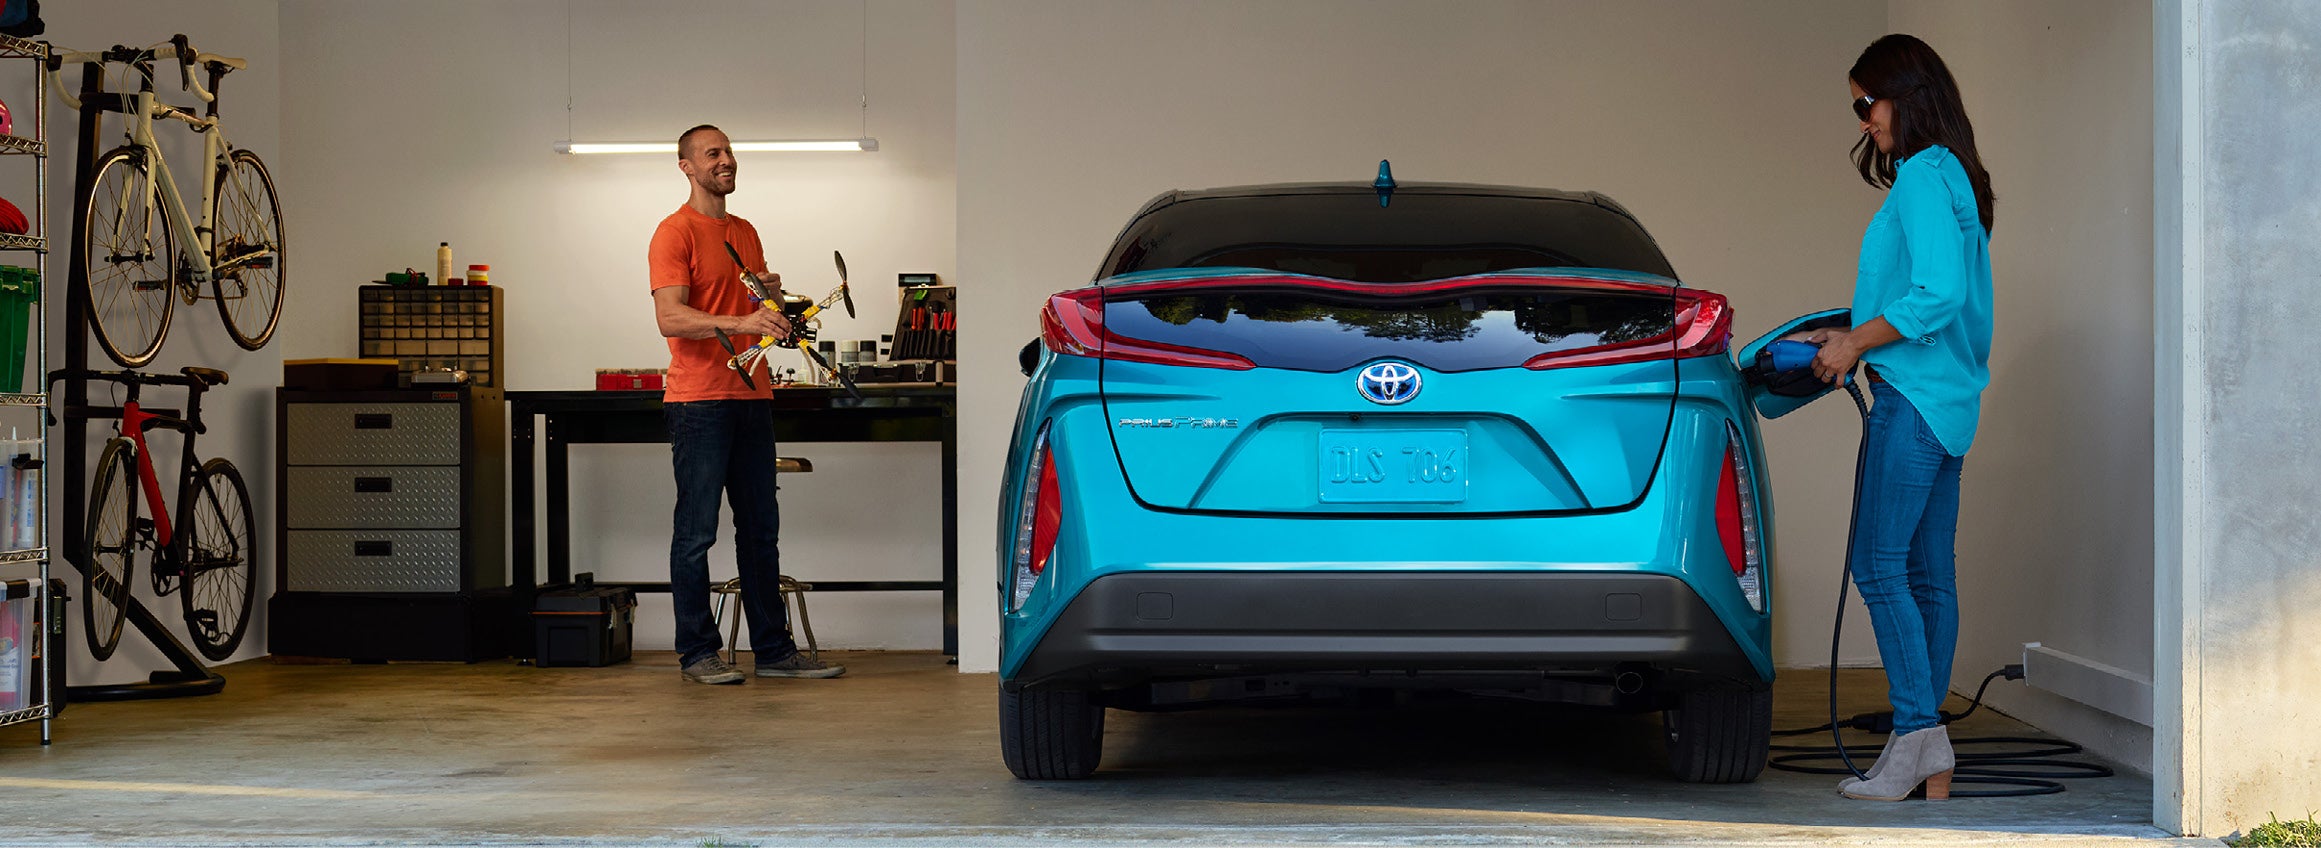 Toyota Prius Prime charging at home garage